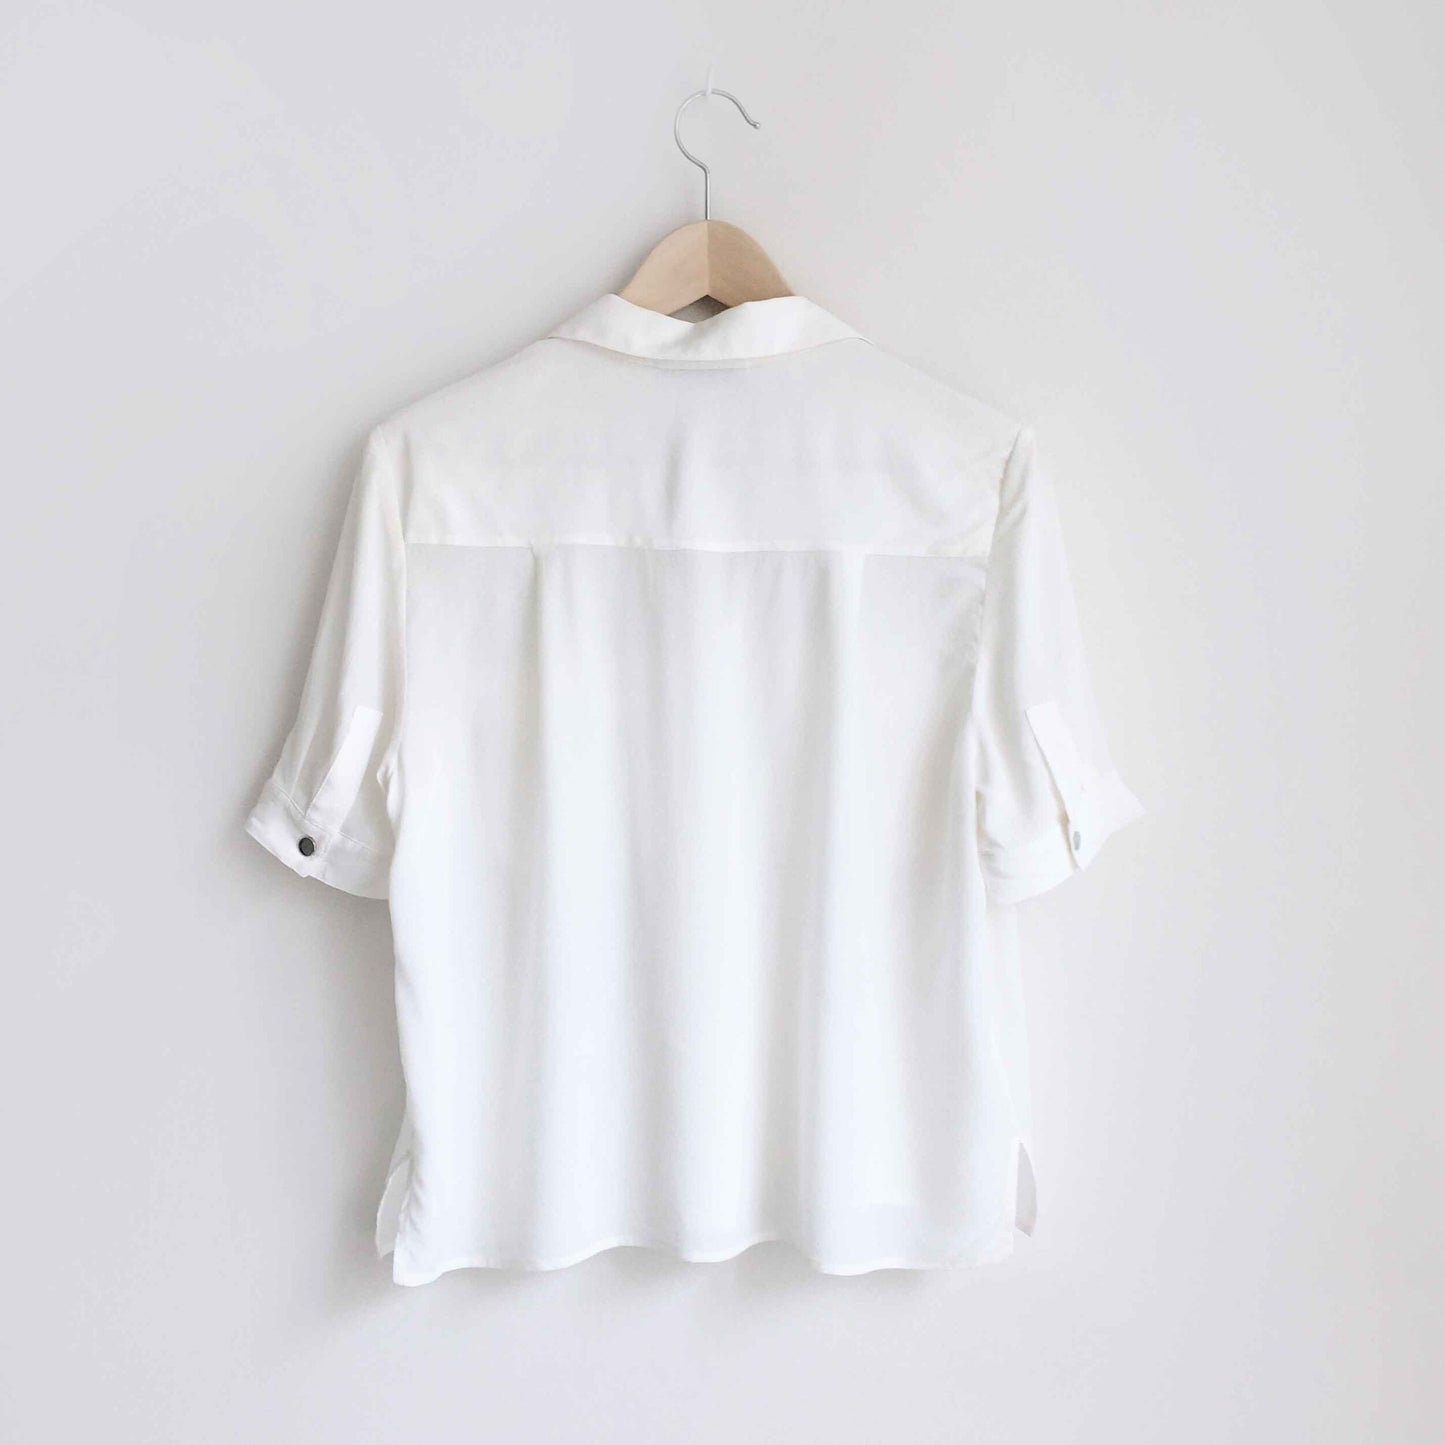 The Kooples silk button down pocket shirt - size Medium